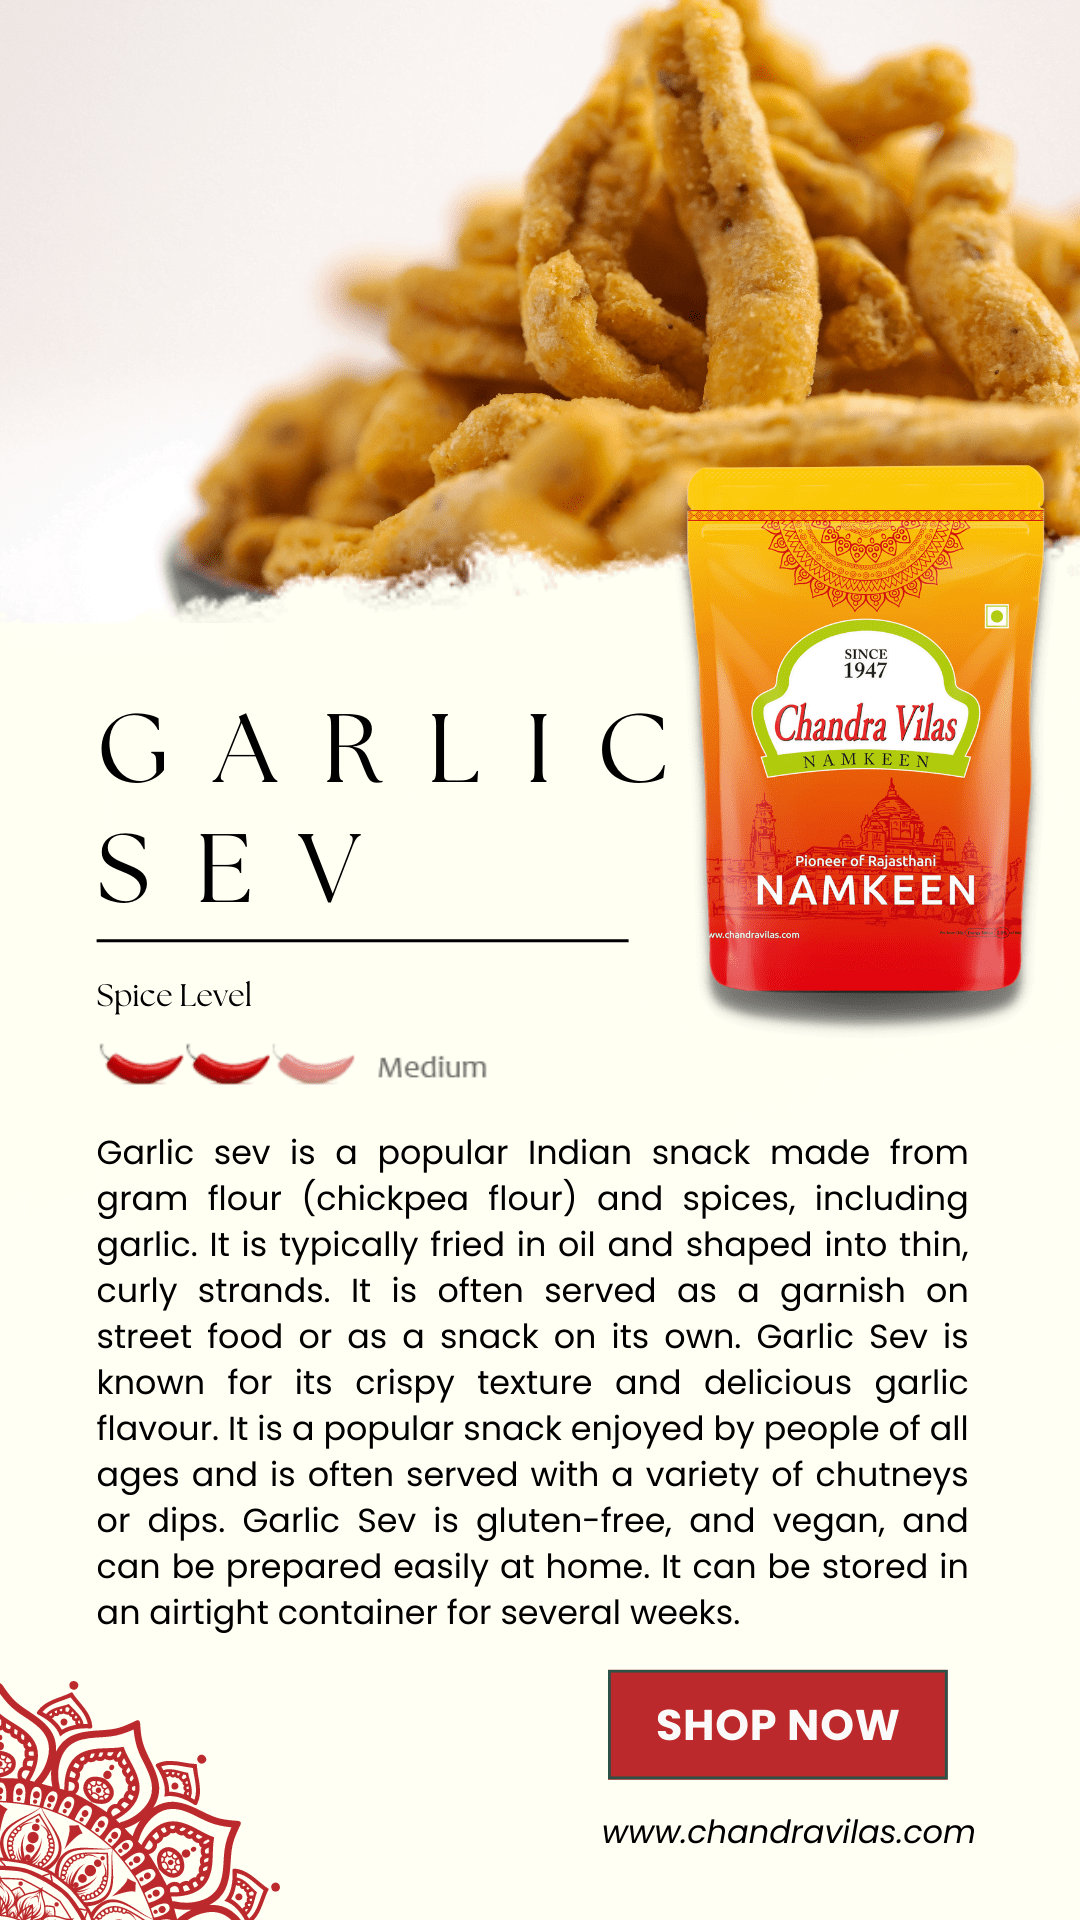 Garlic Sev